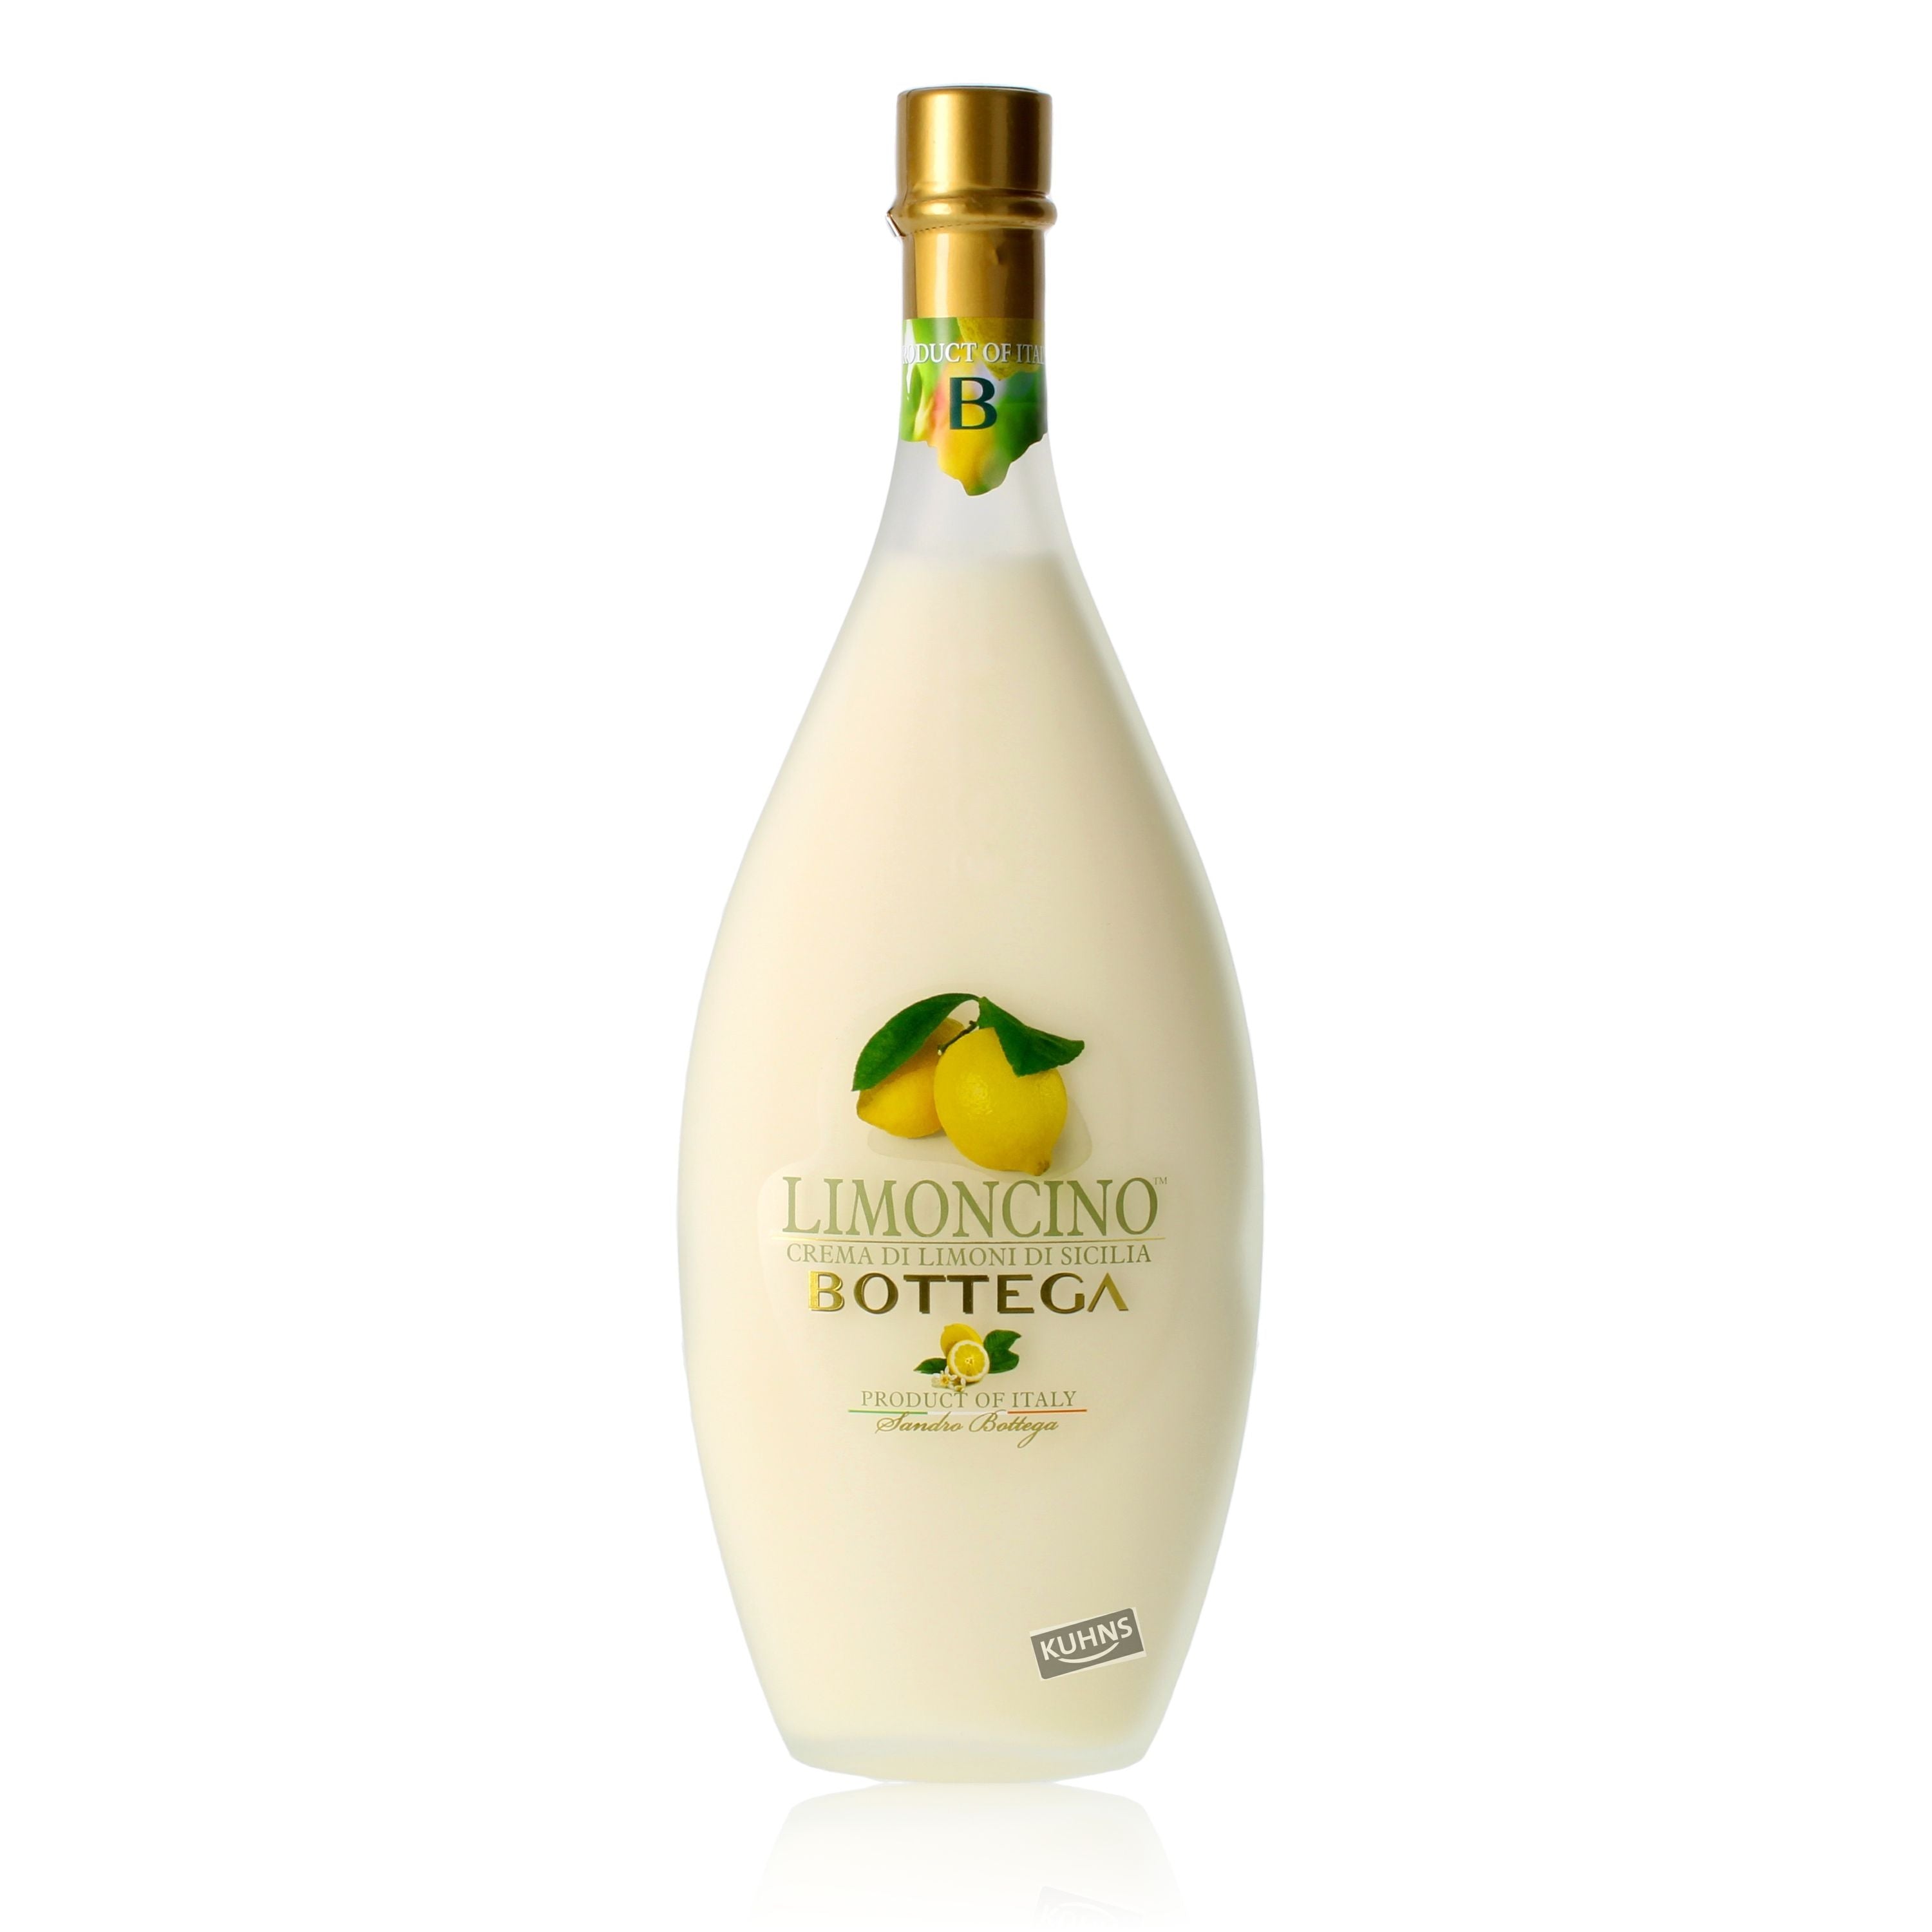 Bottega Limoncino Crema di Limoni 0.5l, alc. 15% vol., lemon liqueur Italy